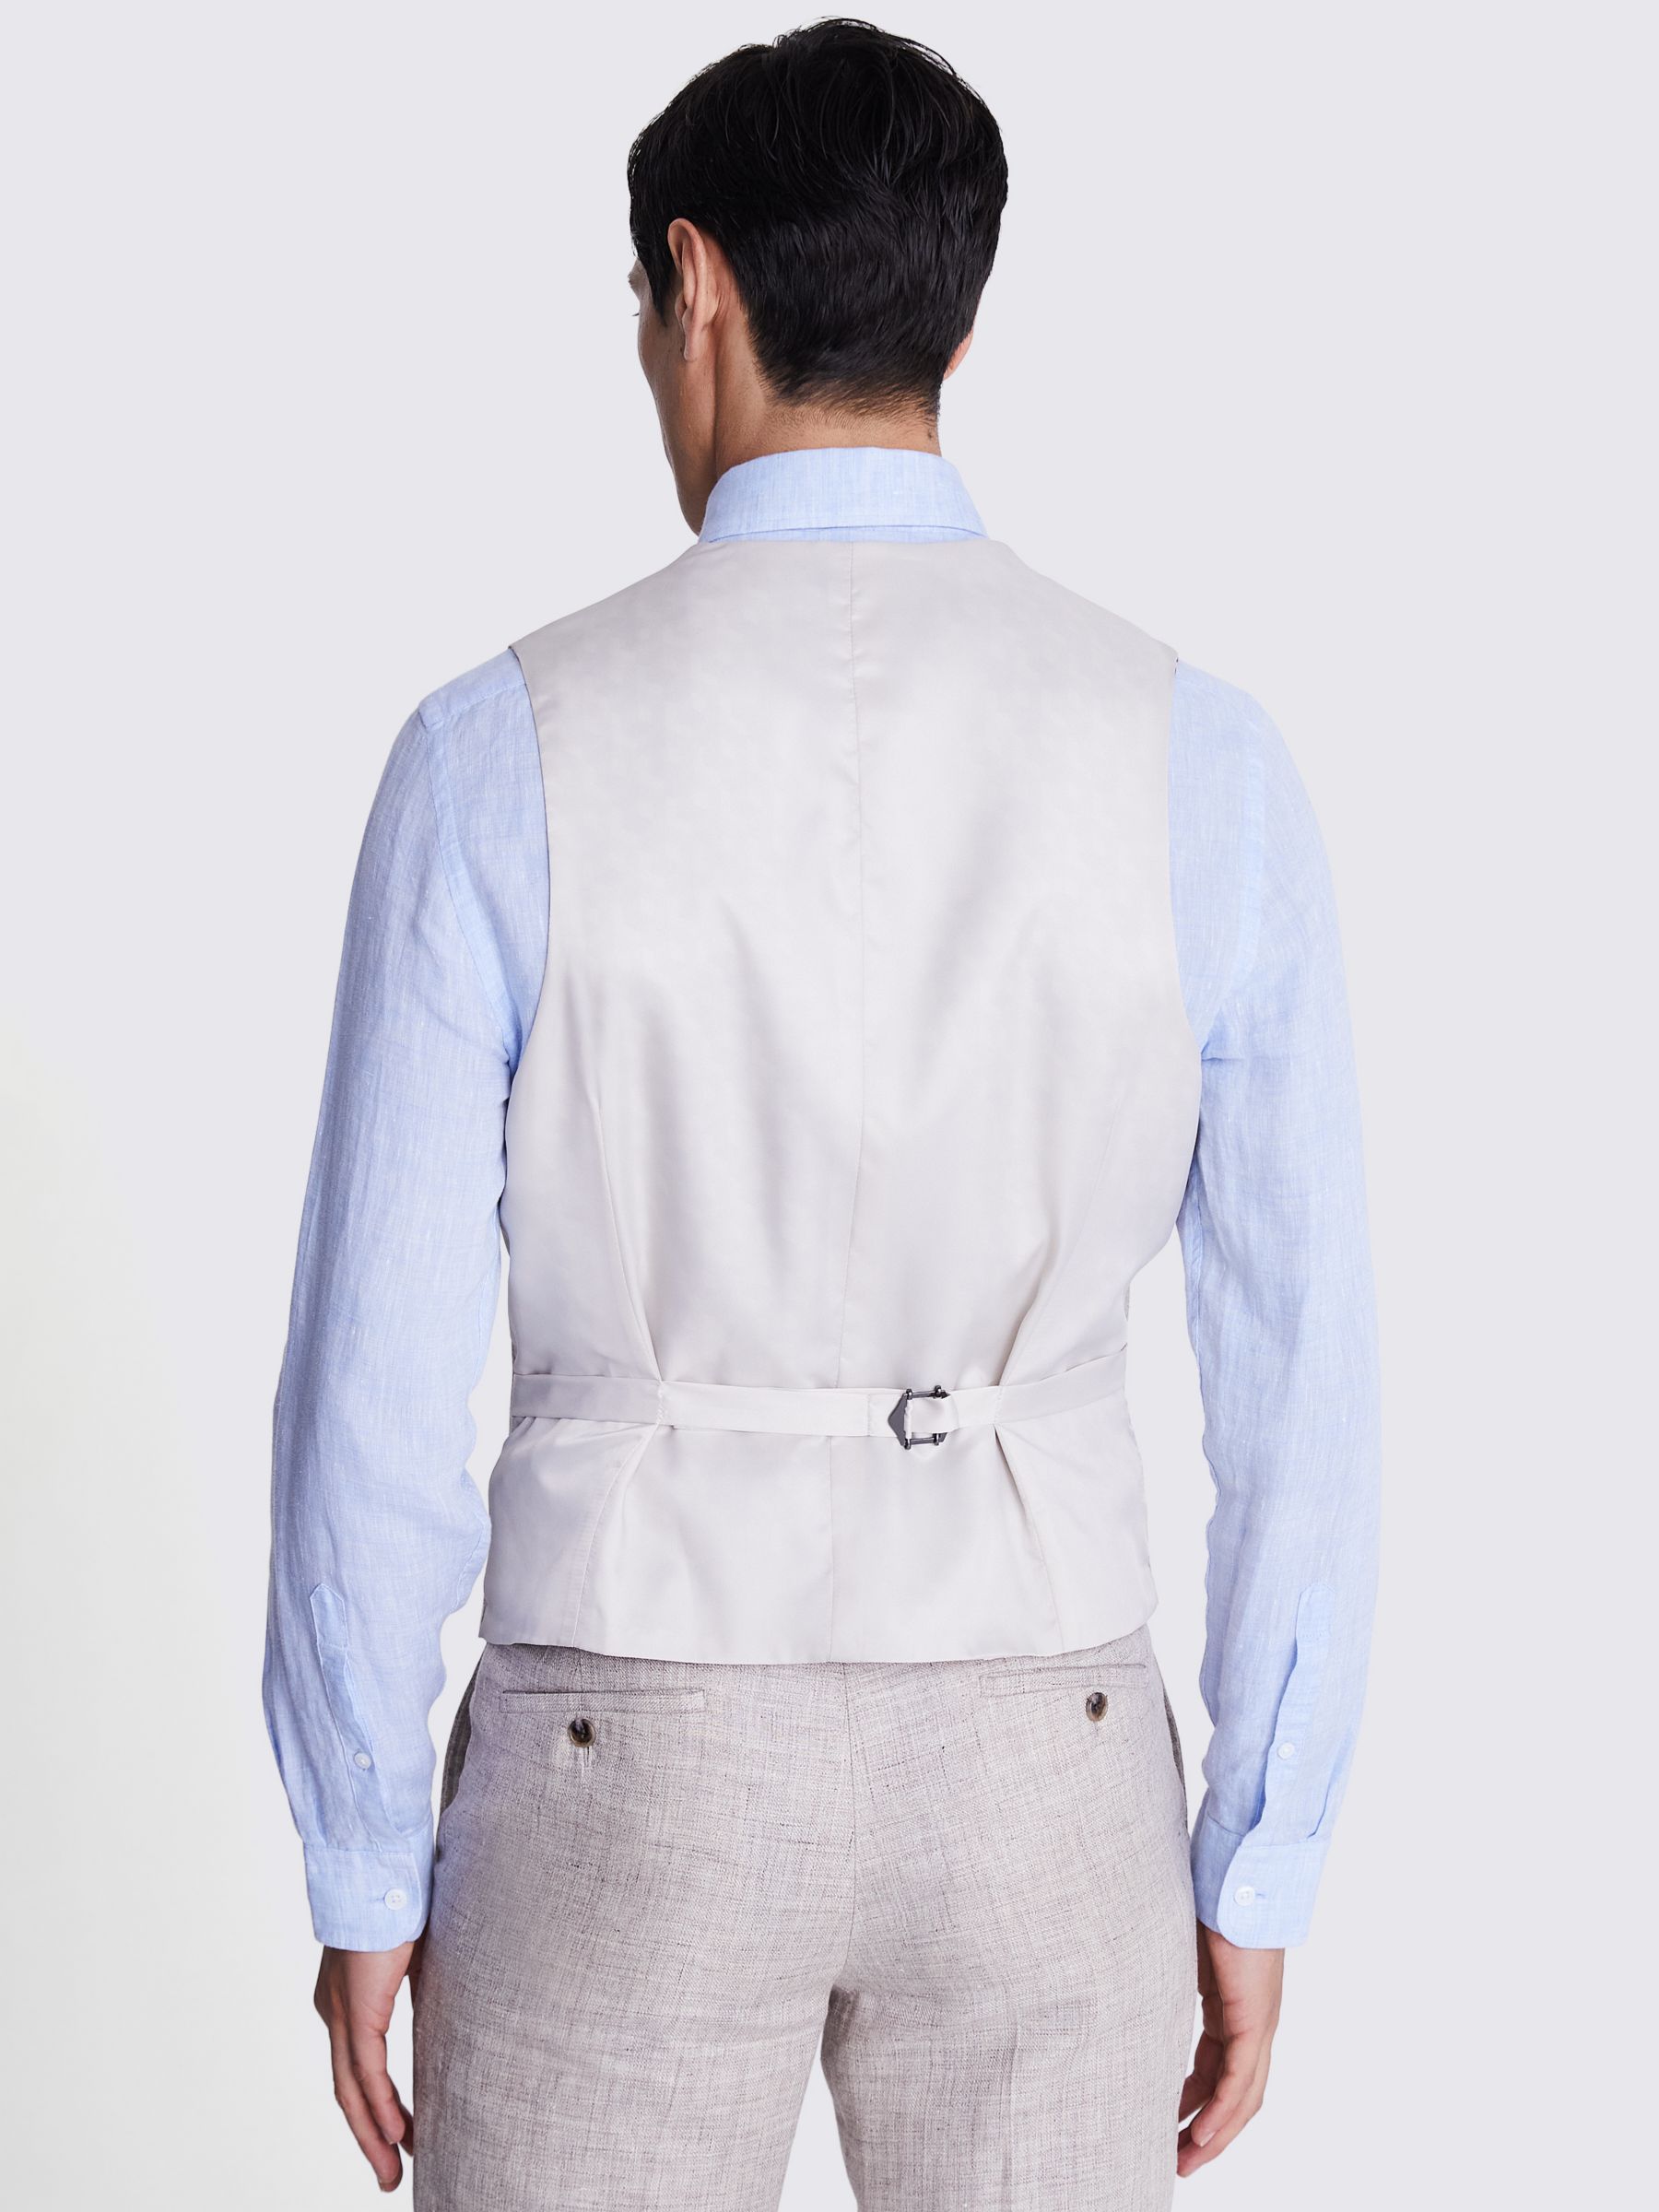 Moss Tailored Fit Linen Waistcoat, Beige, 36R